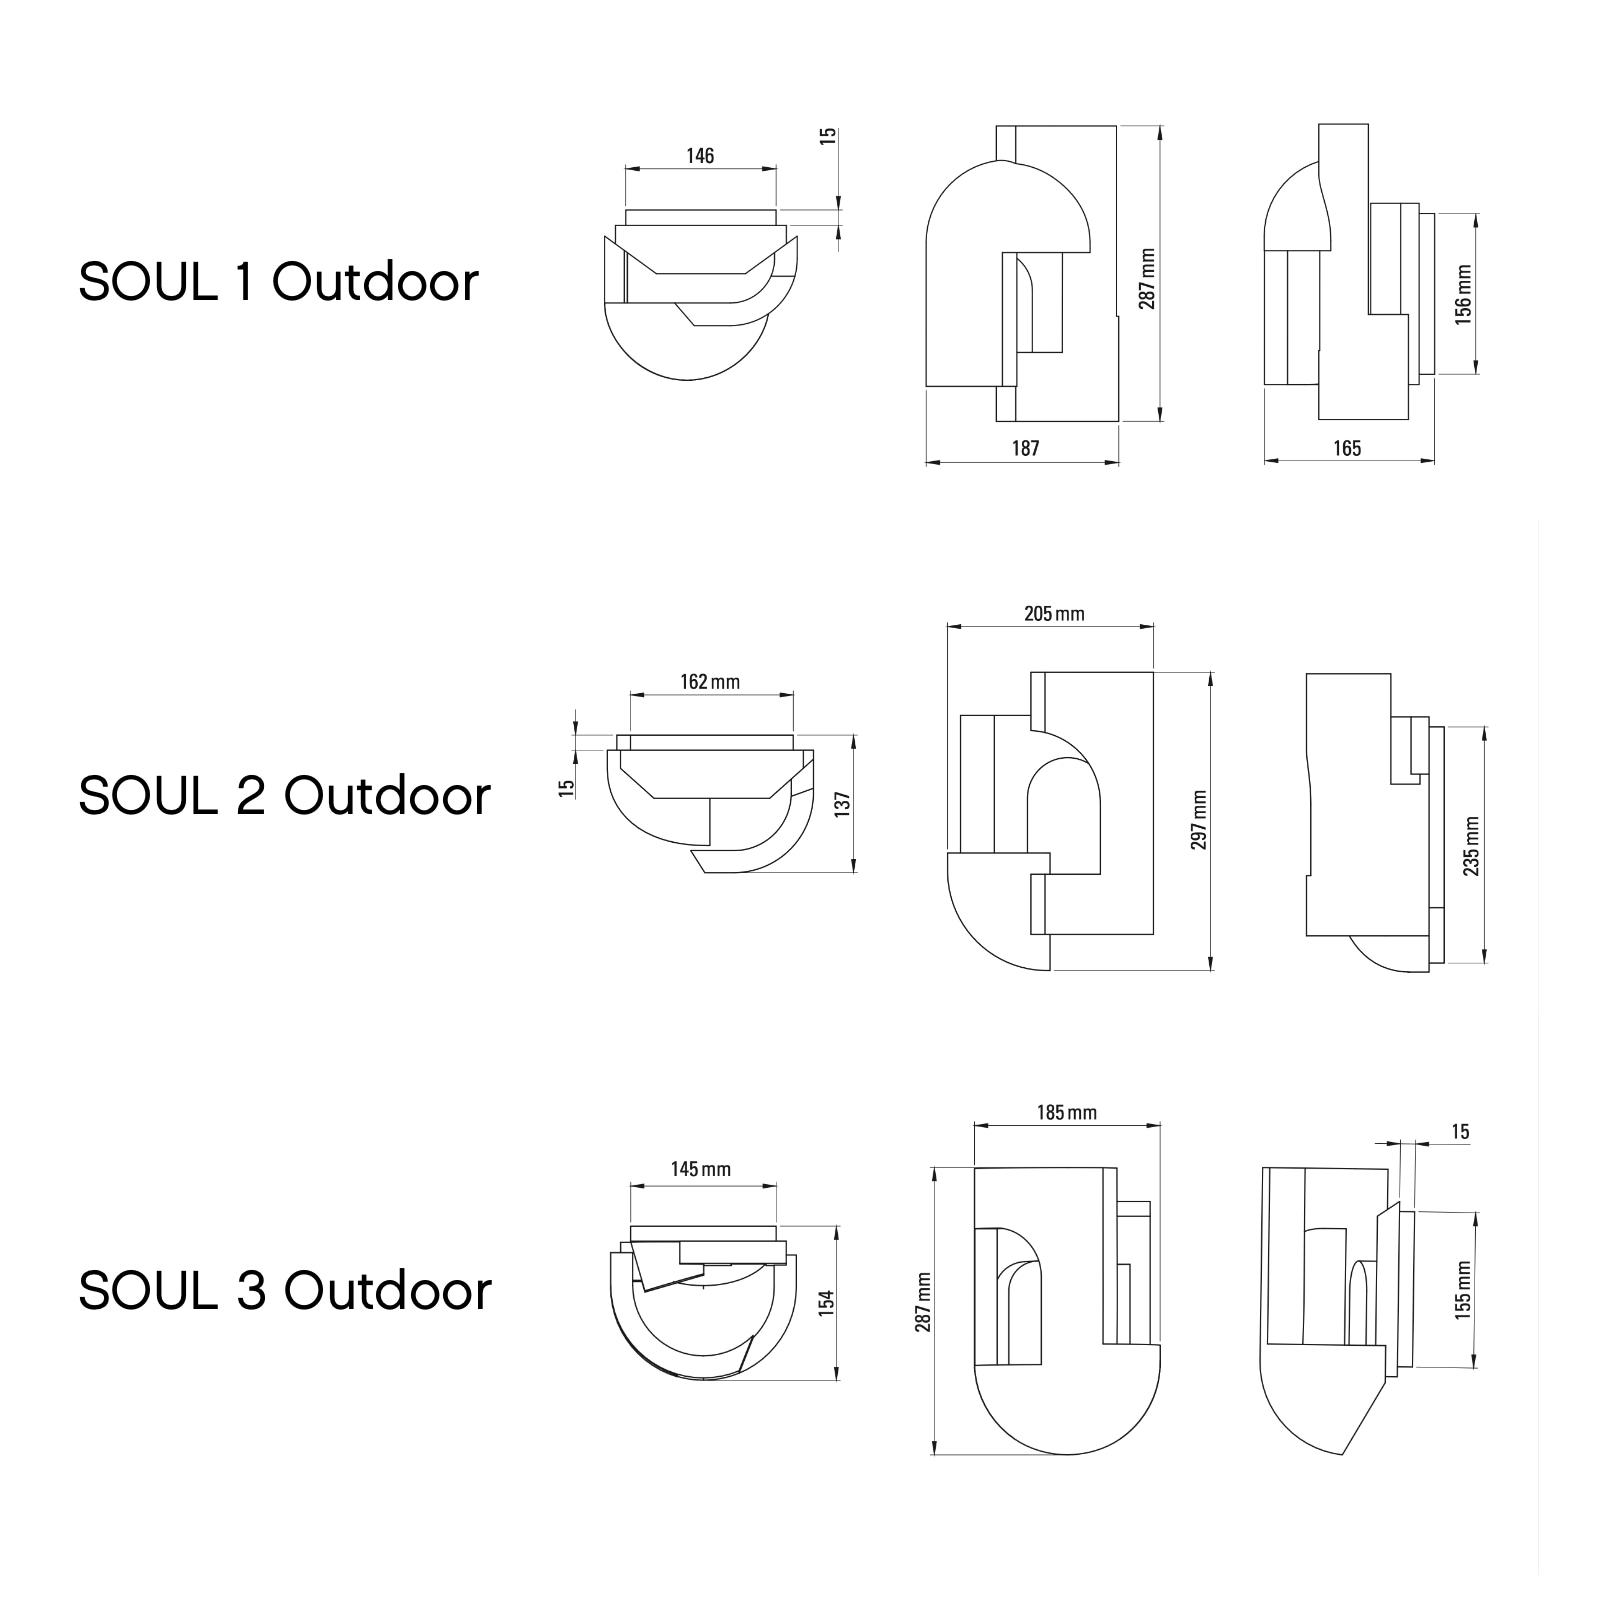  Soul Story Outdoor: Design Wandleuchte aus Beton, IP64: Abmessungen der drei Modelle